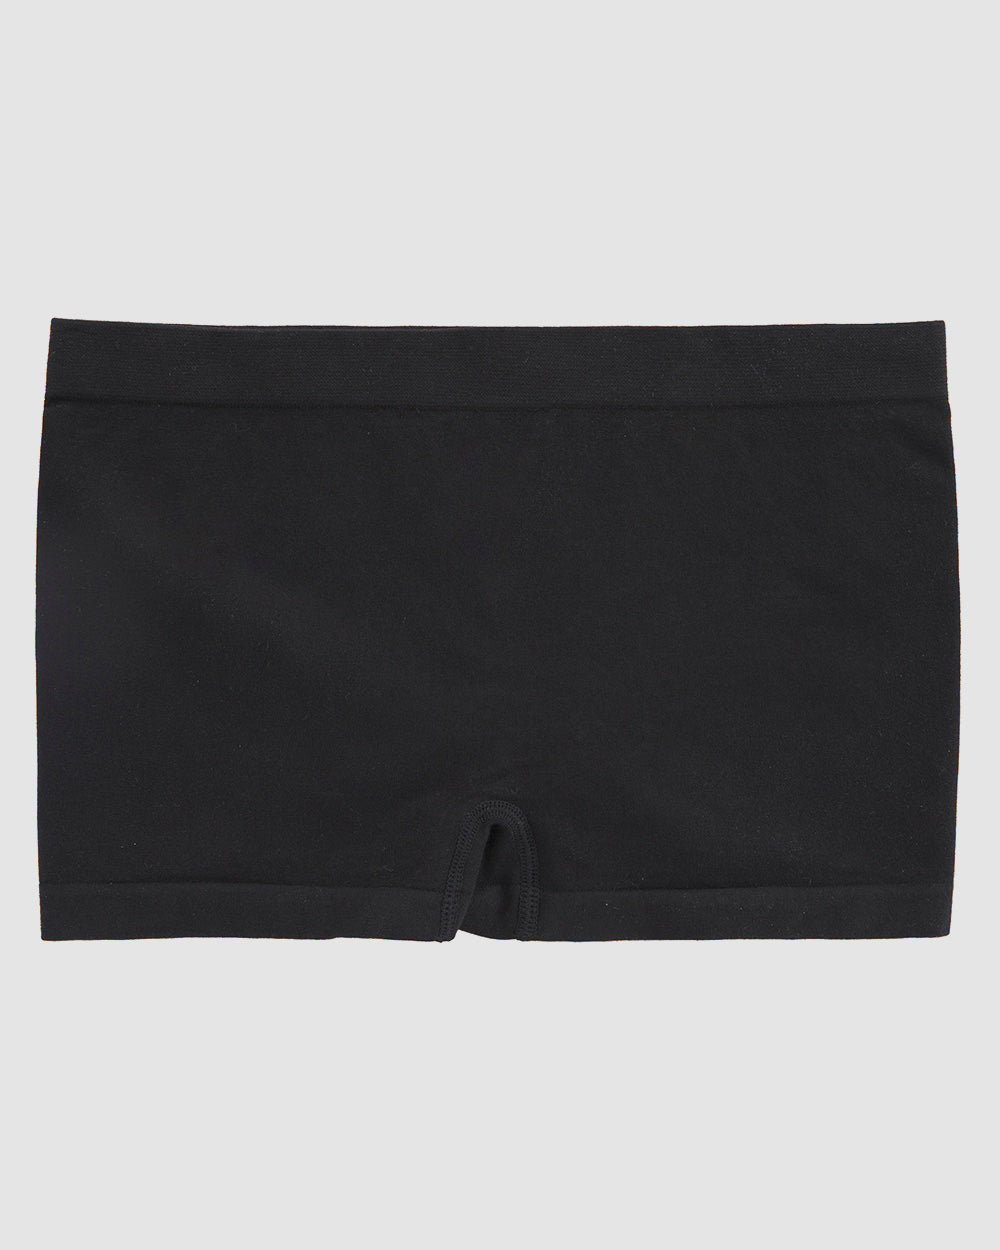 A black Cabana Cotton Seamless Boyshort Underwear